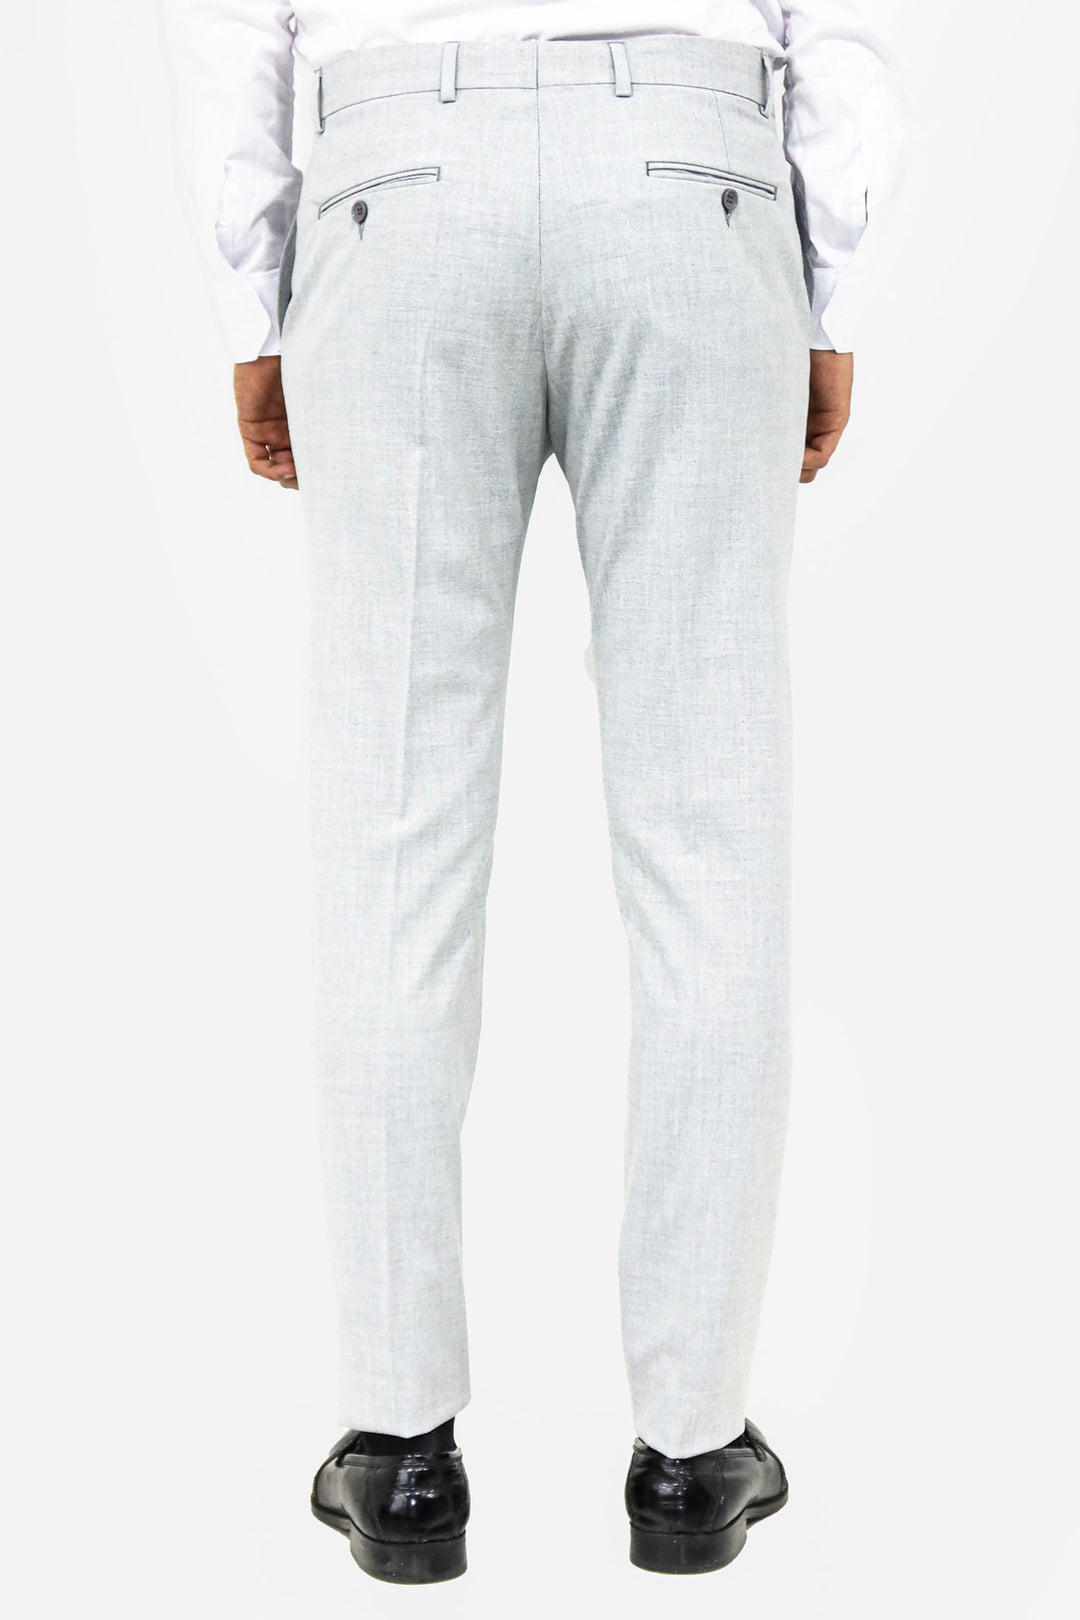 Plain Light Grey Men Dress Pants - Wessi